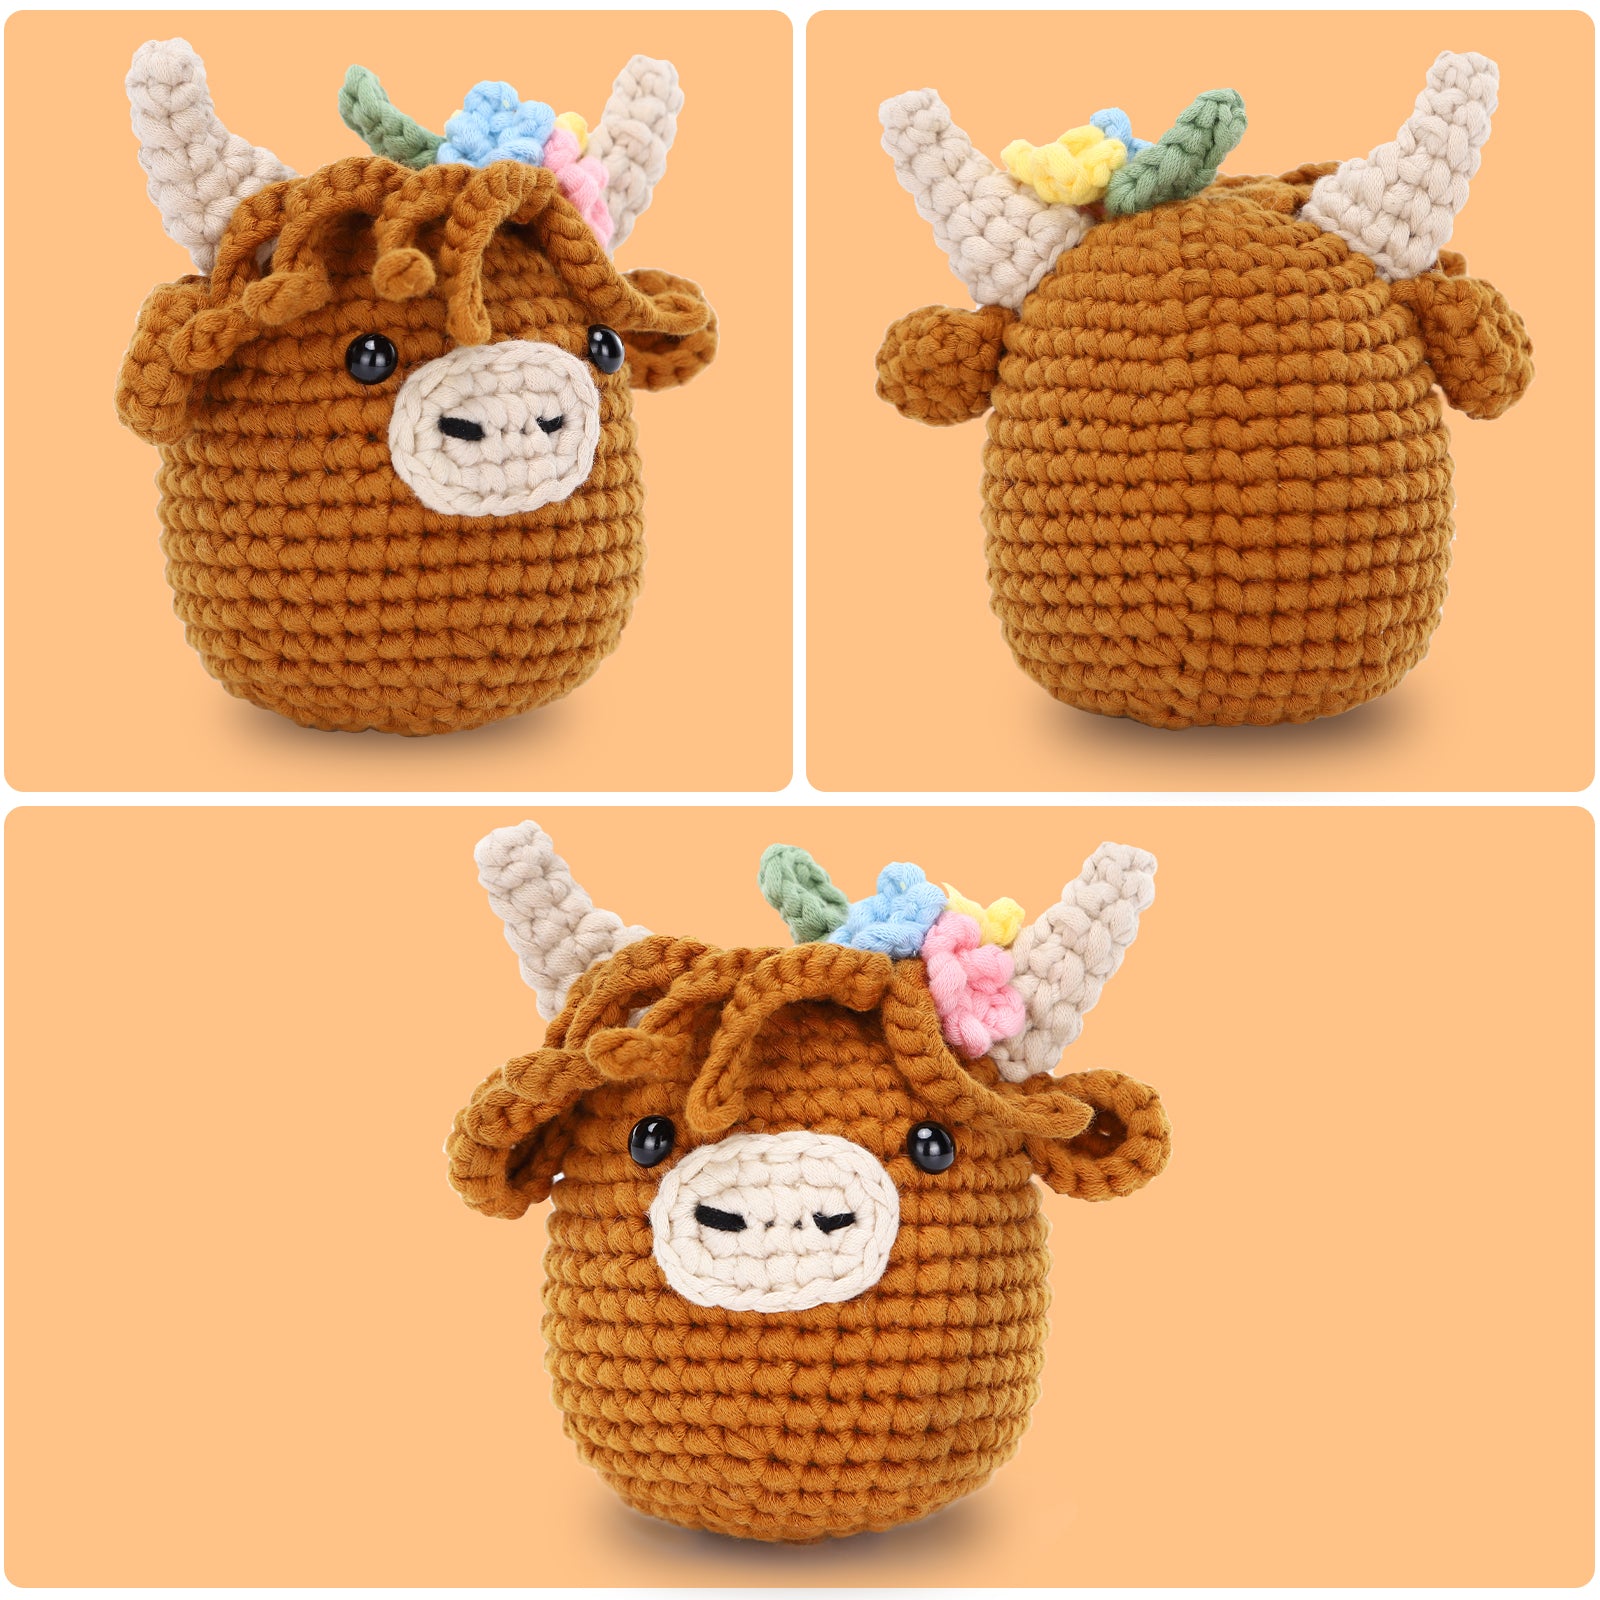 Brezoy Crochet Kit for Beginners Christmas Xmas Birthday Toys Gifts for Boys Girls DIY Craft Kits Father Christmas Crochet Kit for Adults Crochet